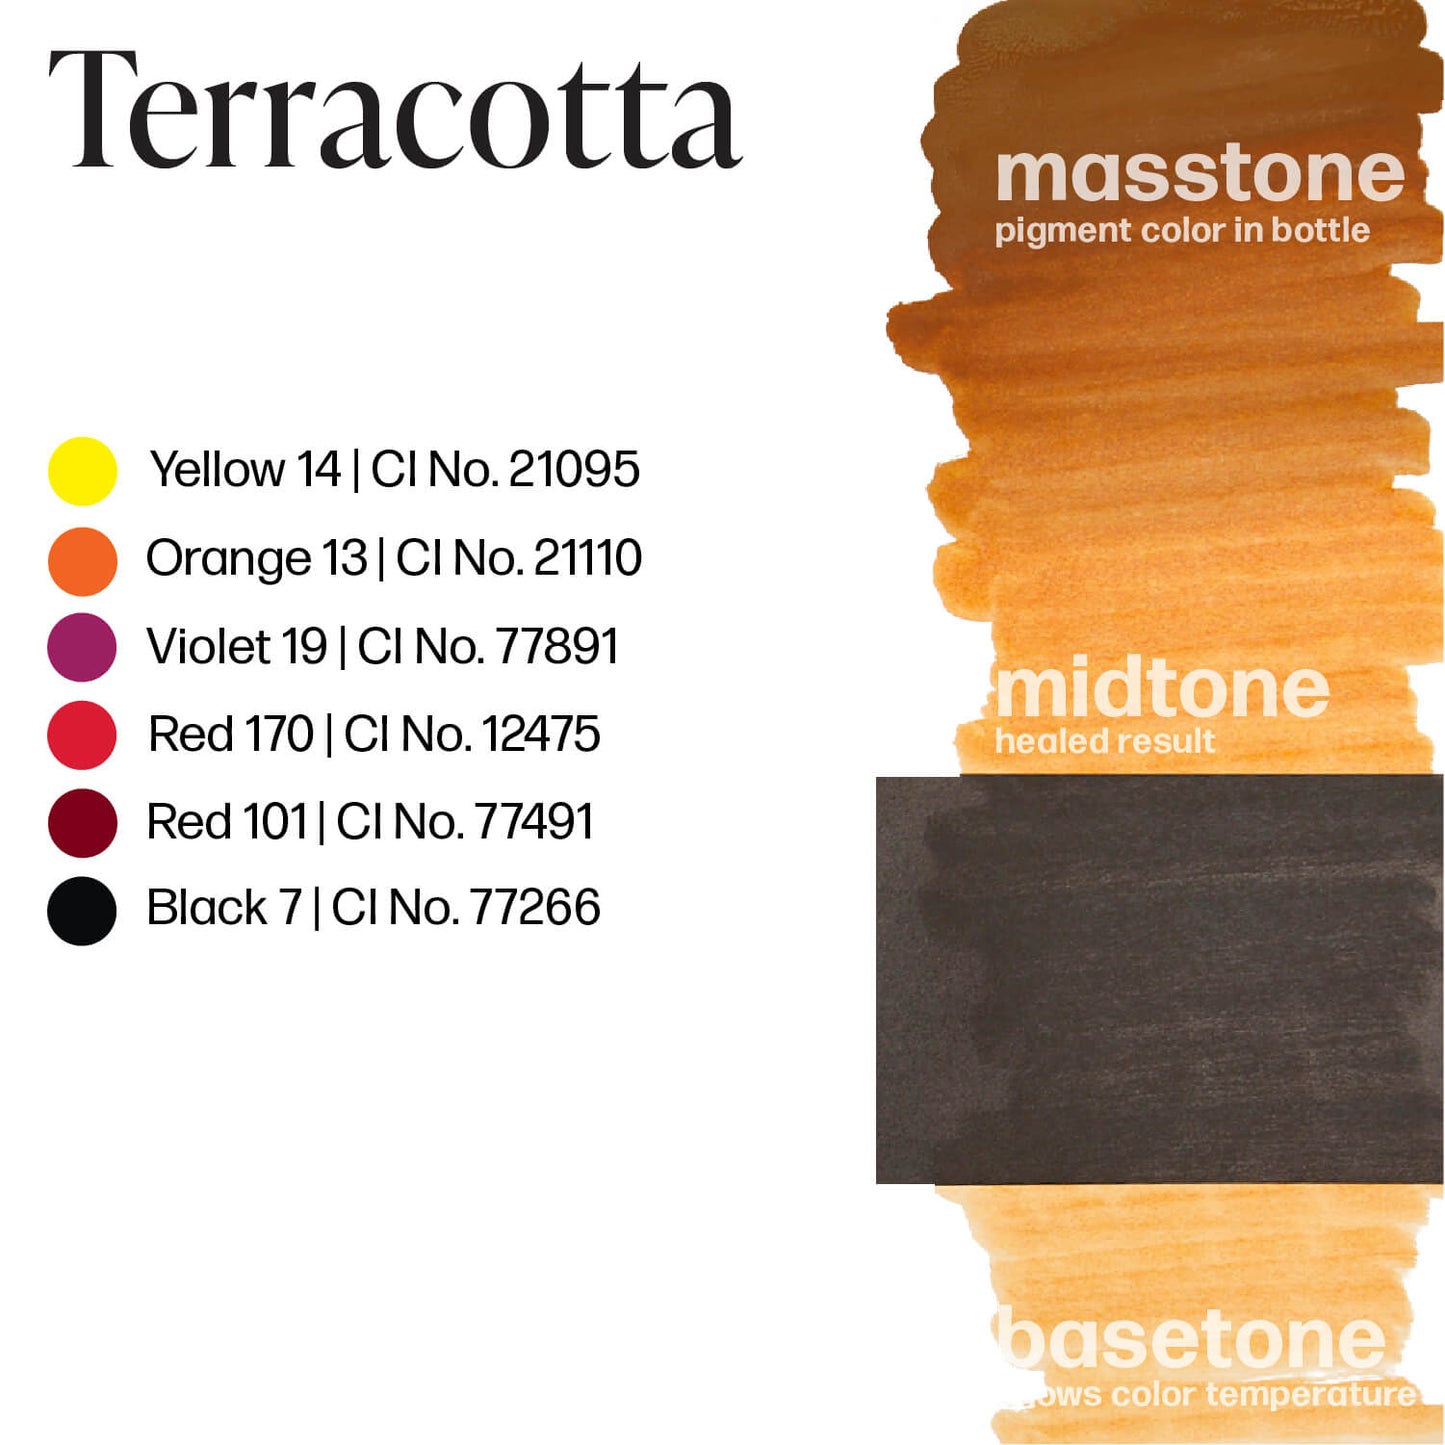 Perma Blend Terracotta Brow Ink Drawdown Masstone Midtone Basetone